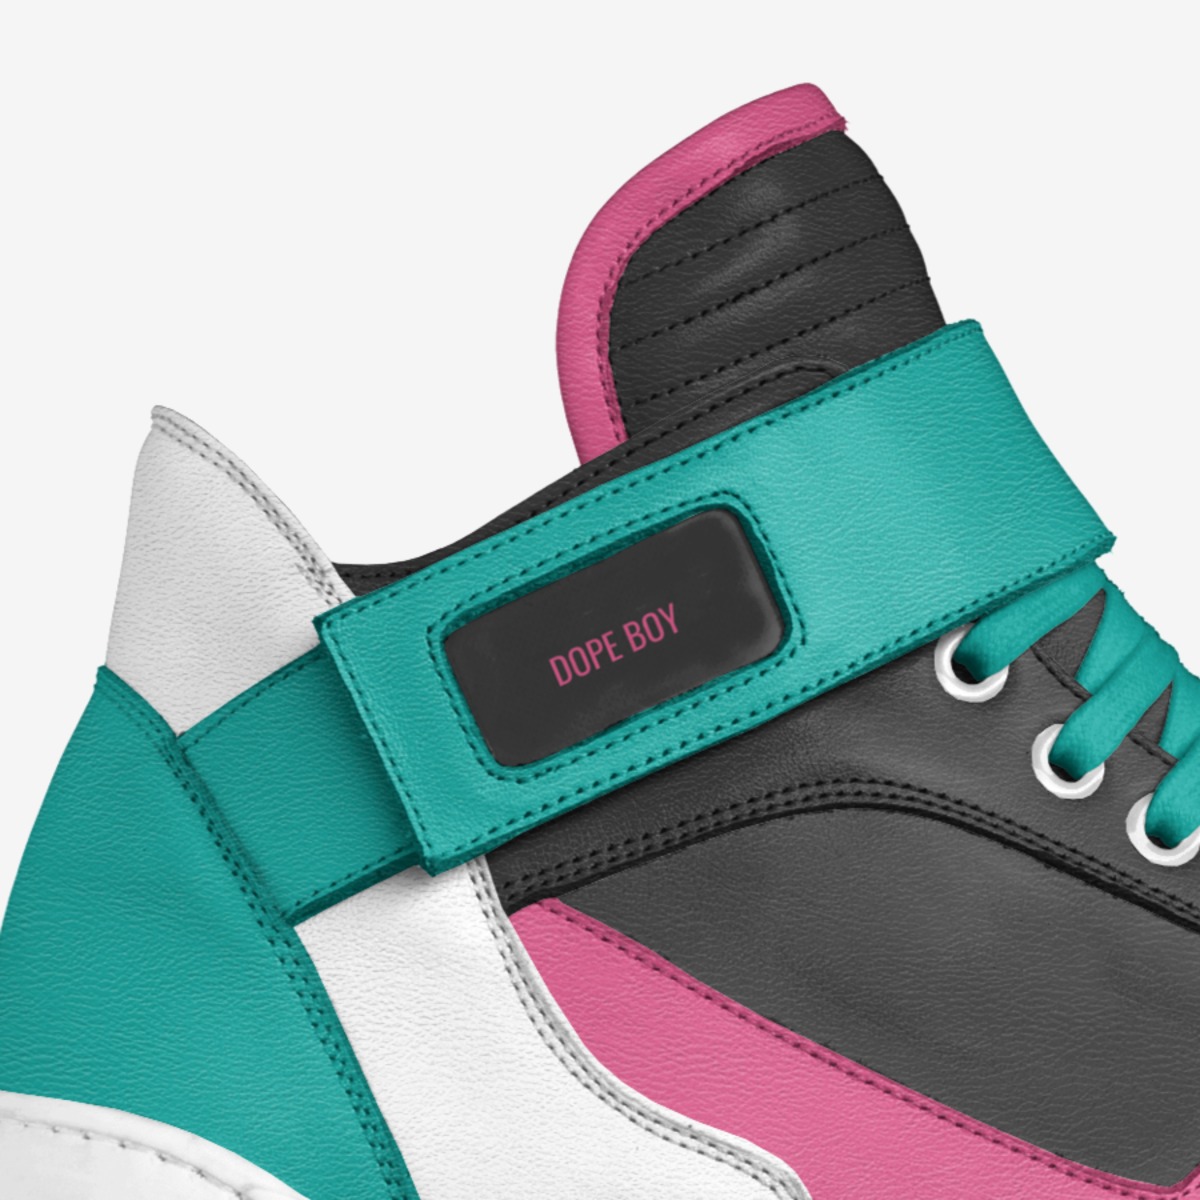 Boy$ | Custom Shoe concept by Robert Gale